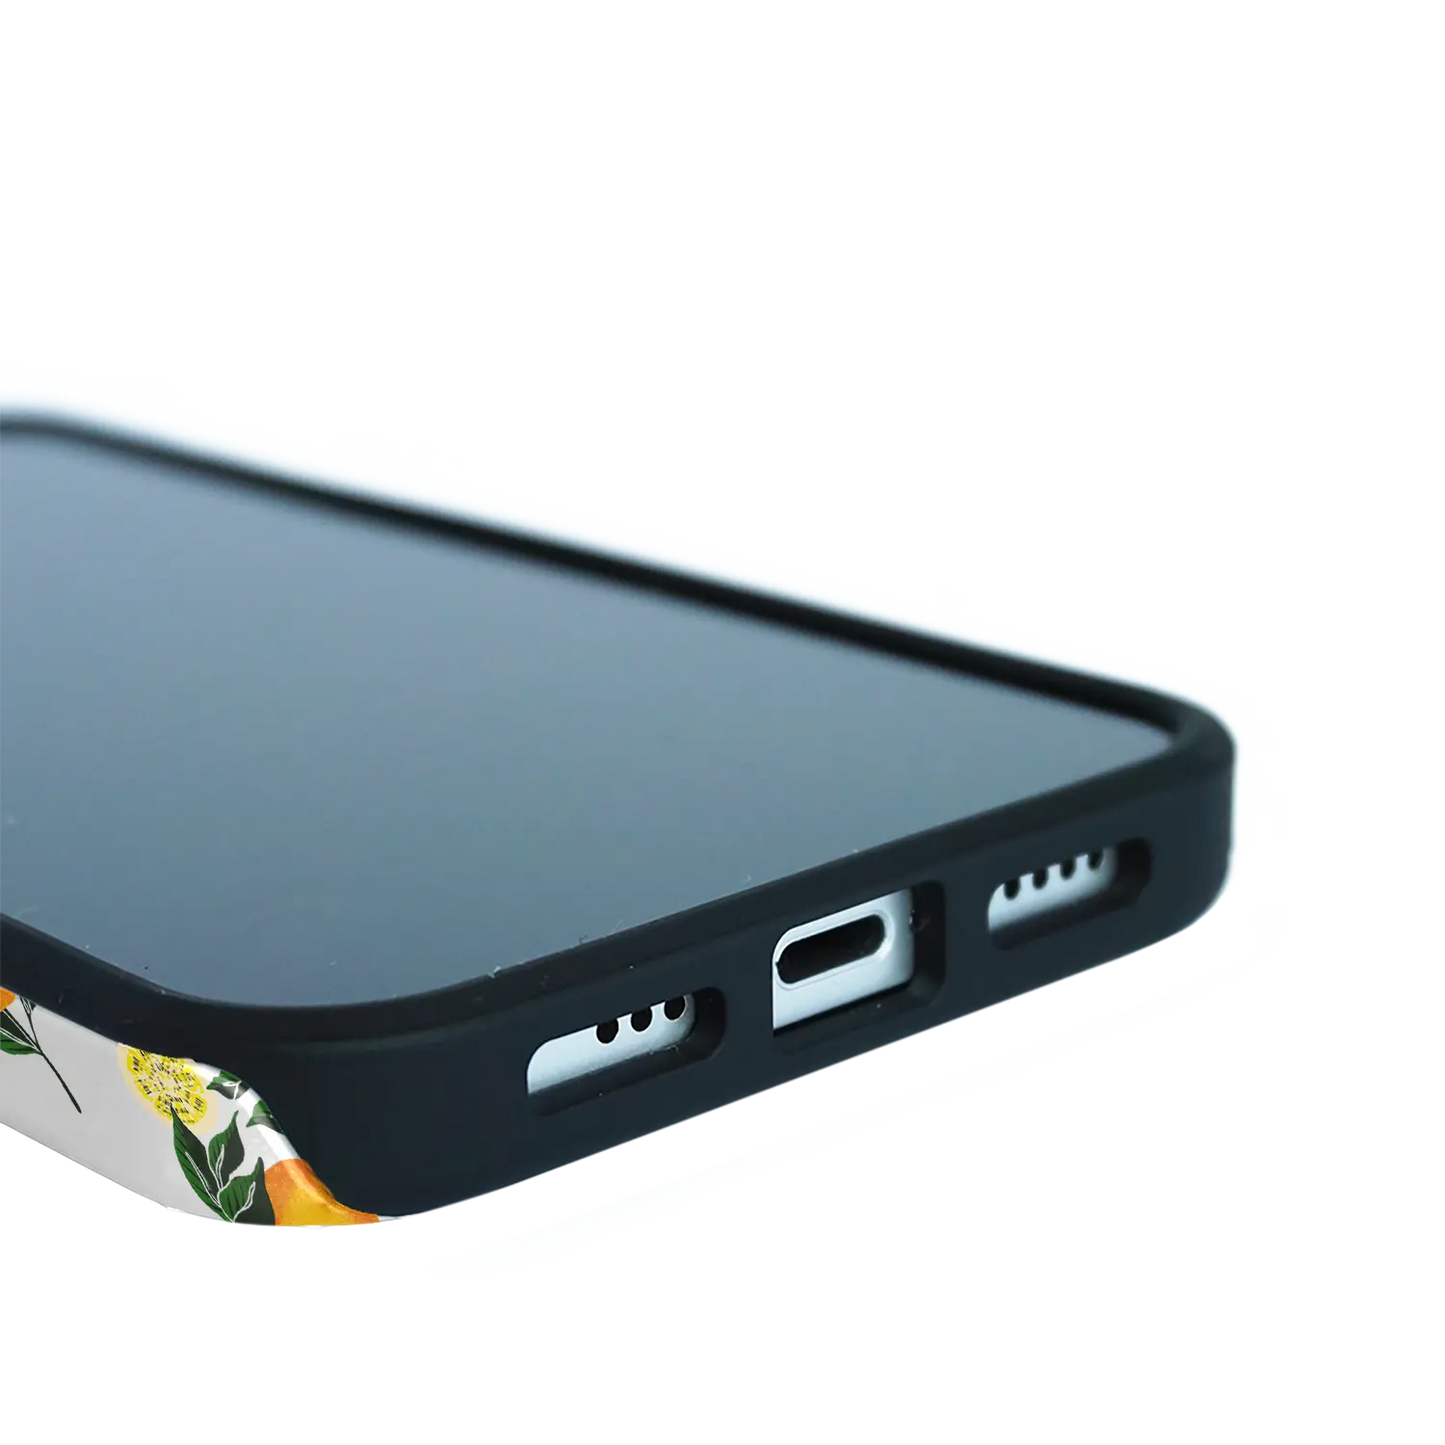 Patrón limón - Carcasa personalizada Galaxy S